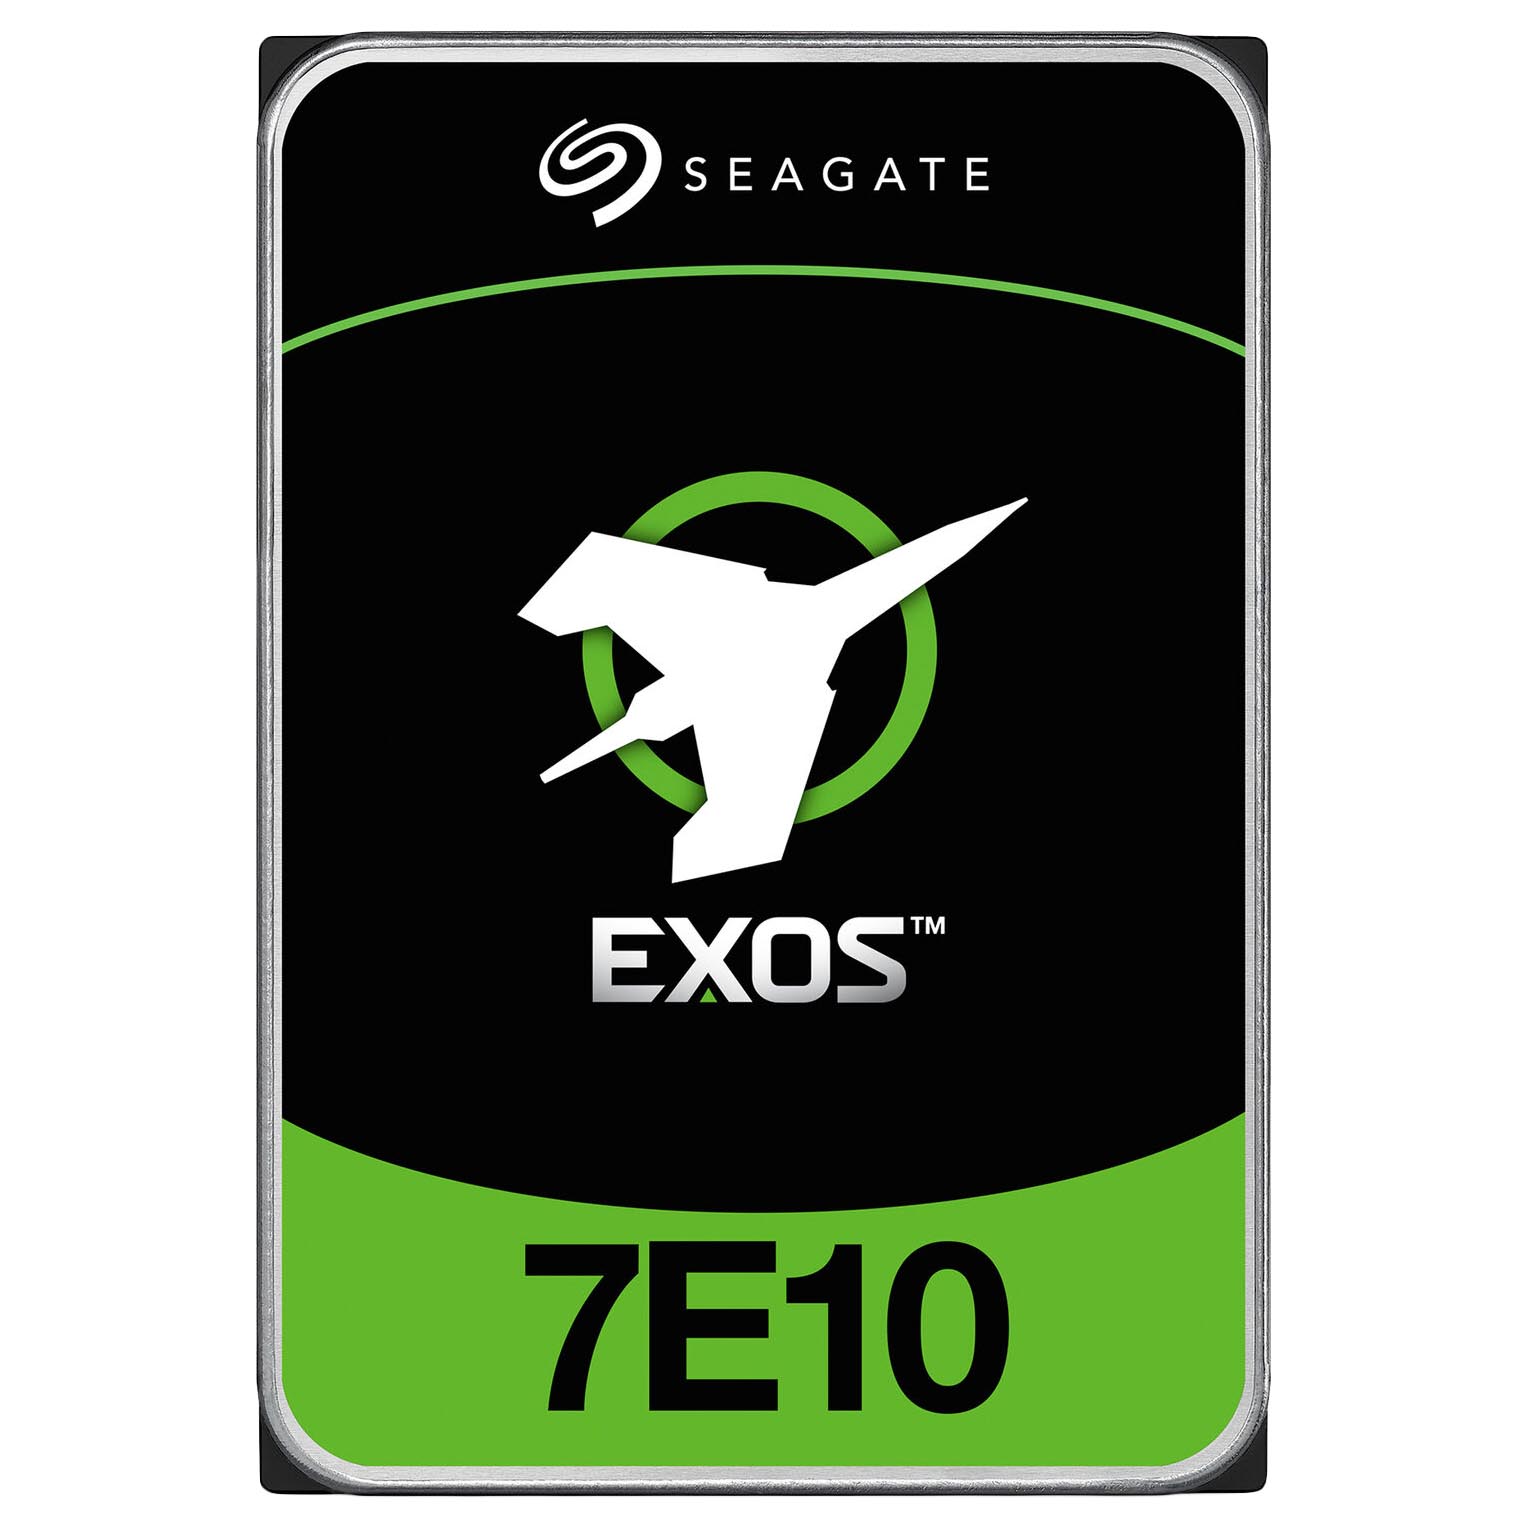 Внутренний жесткий диск Seagate Exos 7E10, ST10000NM017B, 10 Тб жесткий диск seagate exos x20 20тб st20000nm007d